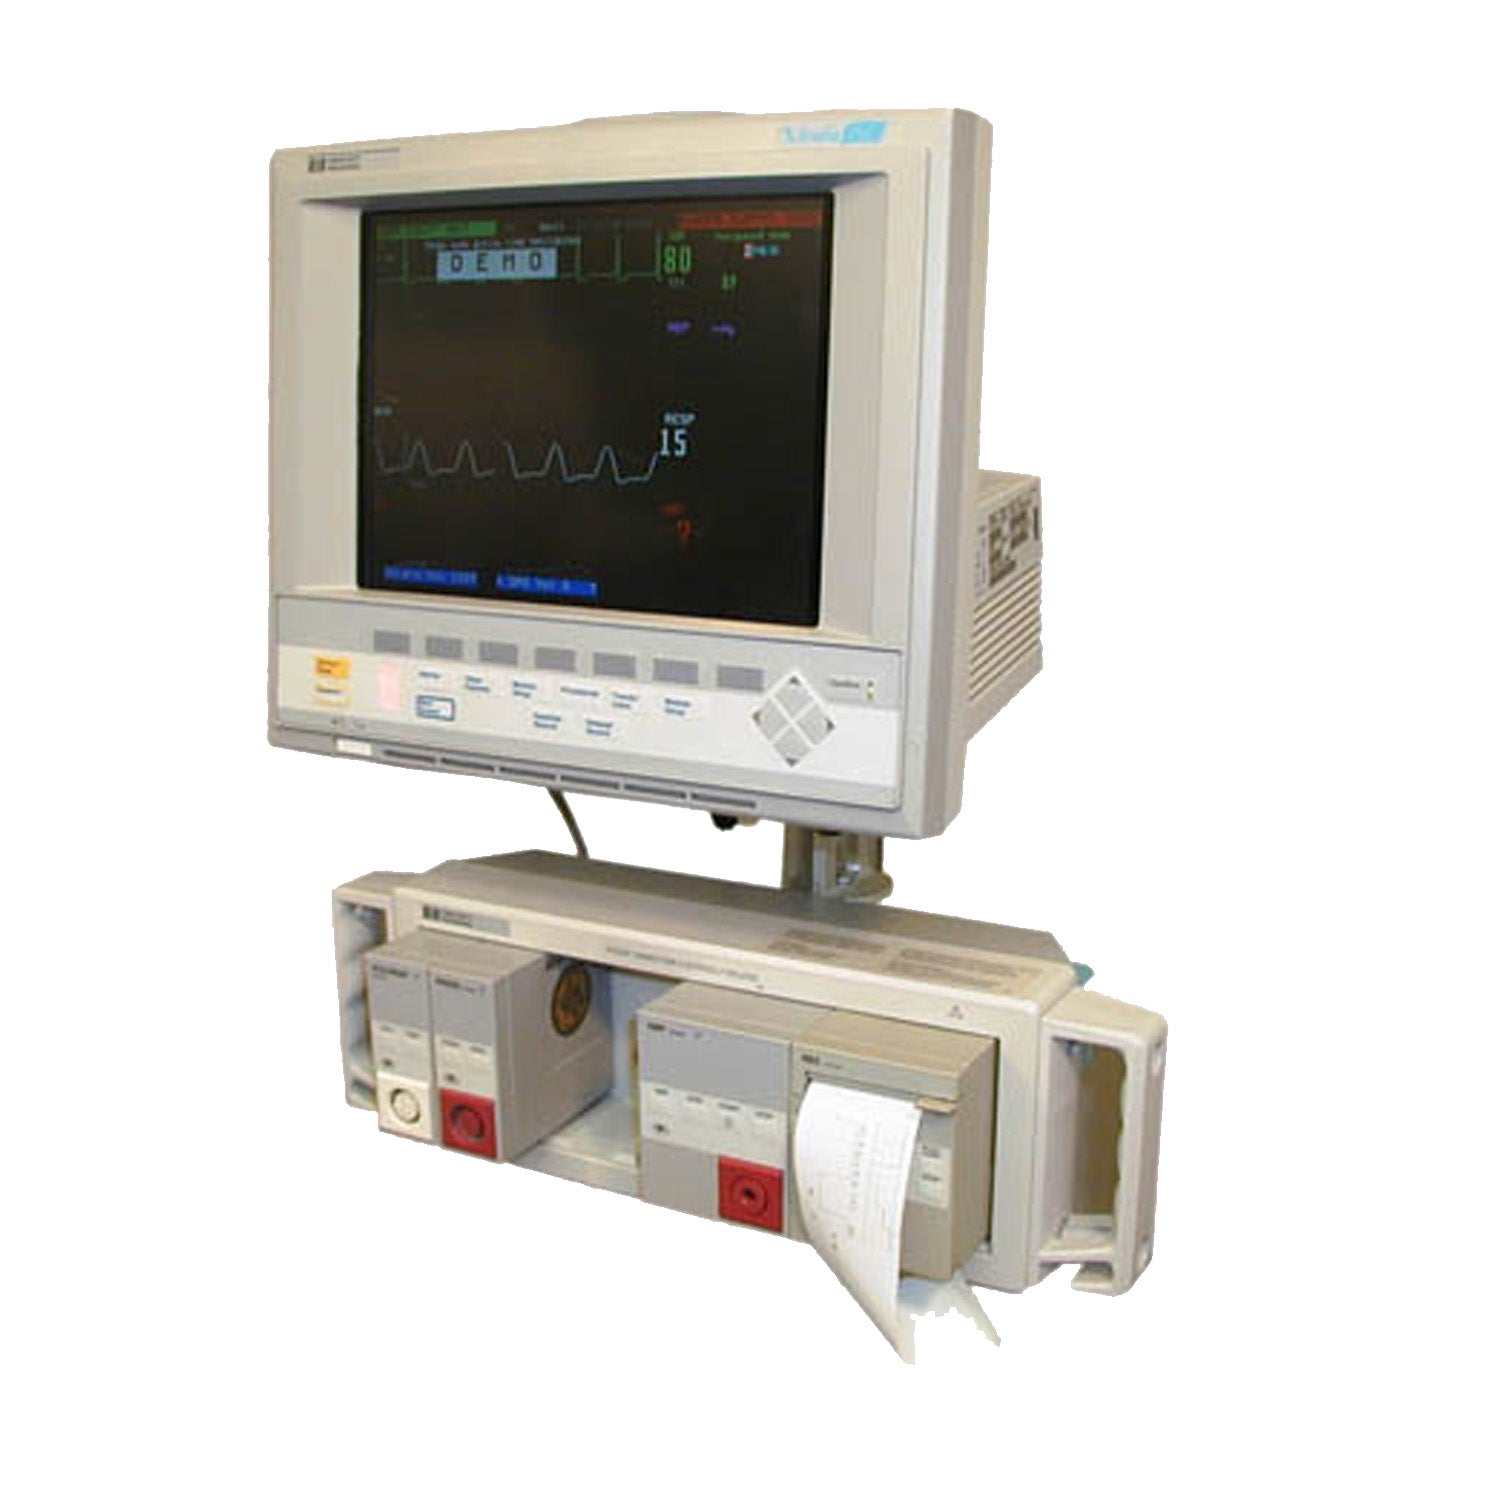 Philips Viridia CMS 2000 Anesthesia Monitor